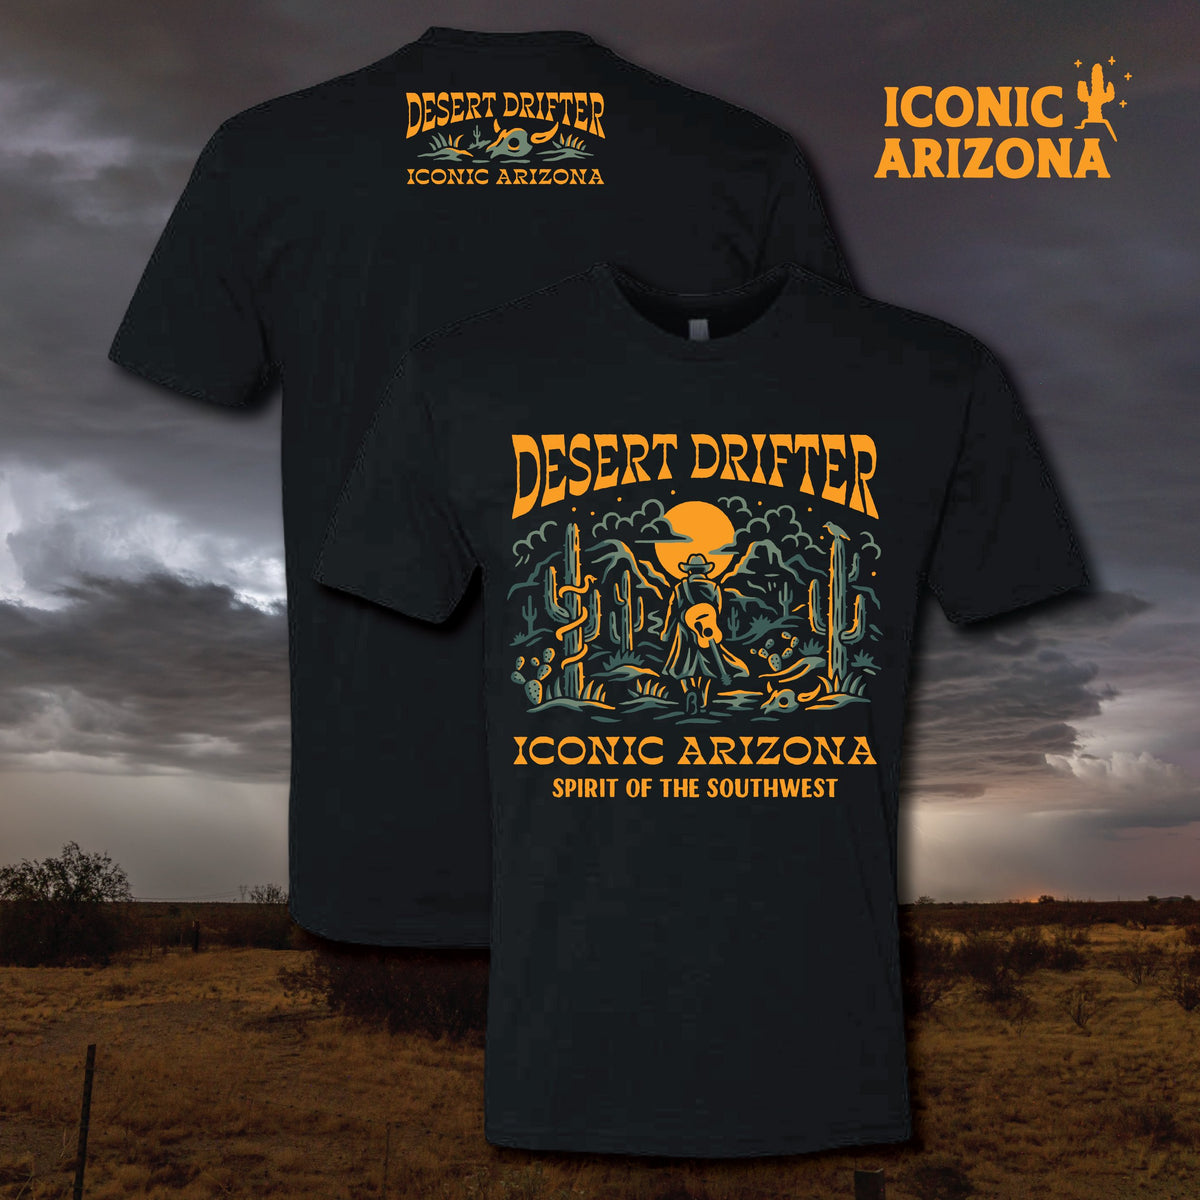 Iconic T – Arizona Shirts